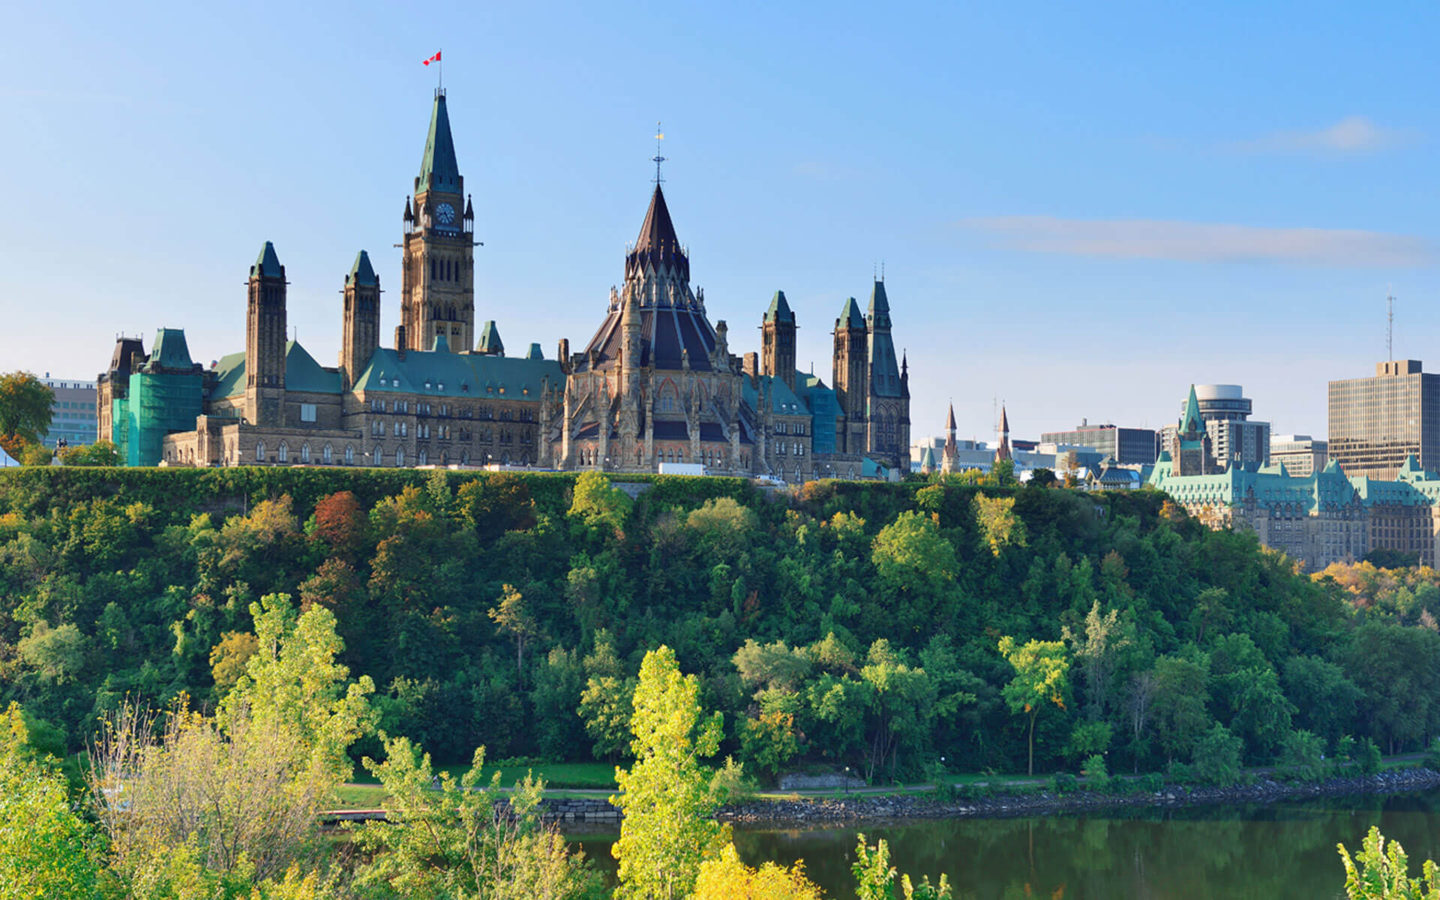 Parliament buildings on Parliament Hill in Ottawa